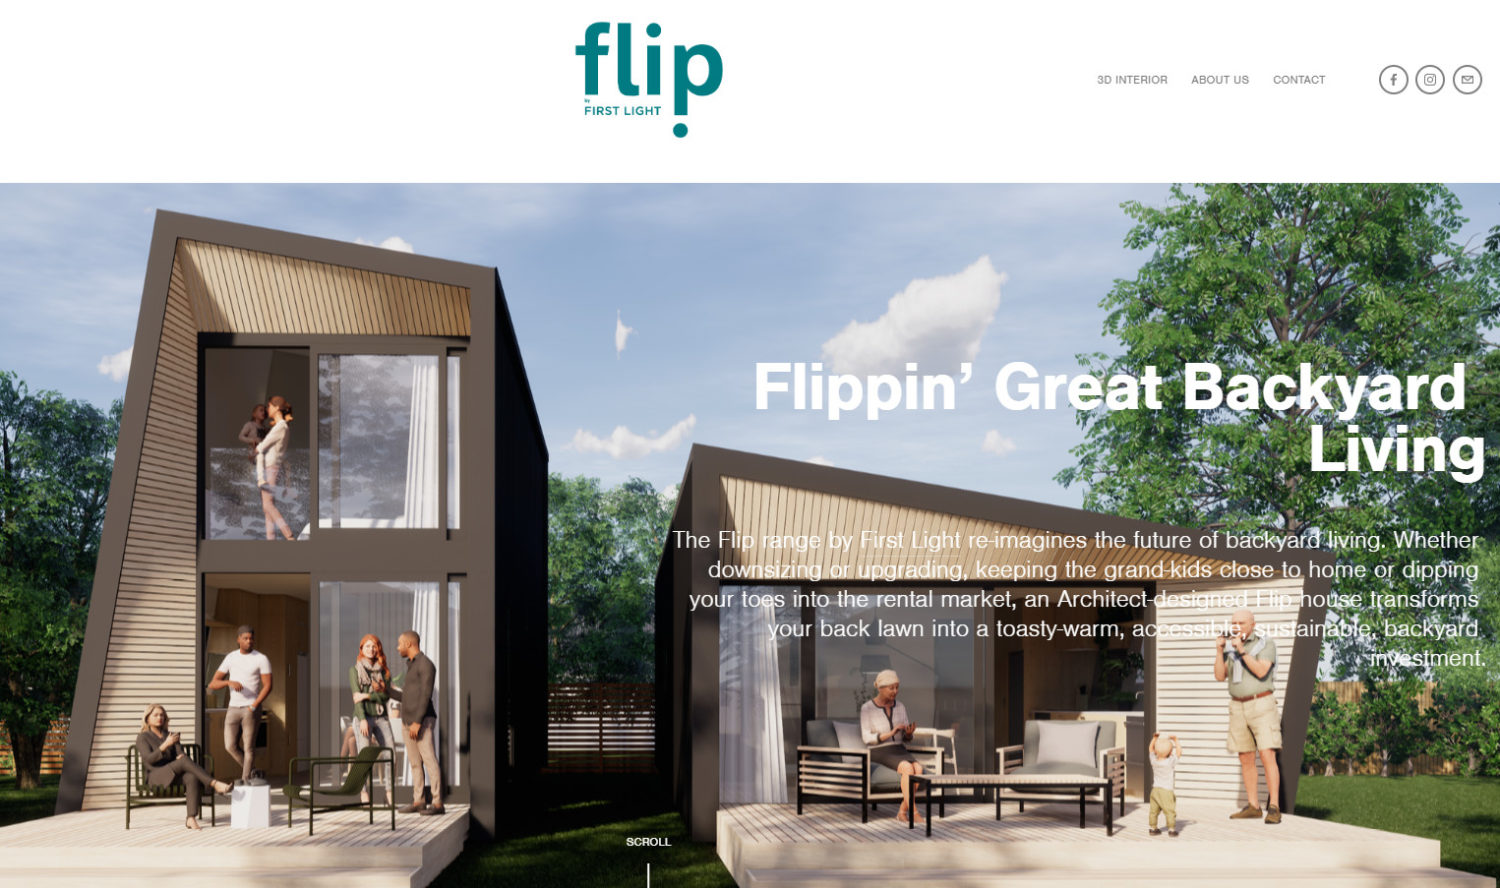 Flip – Great Backyard Living cover image